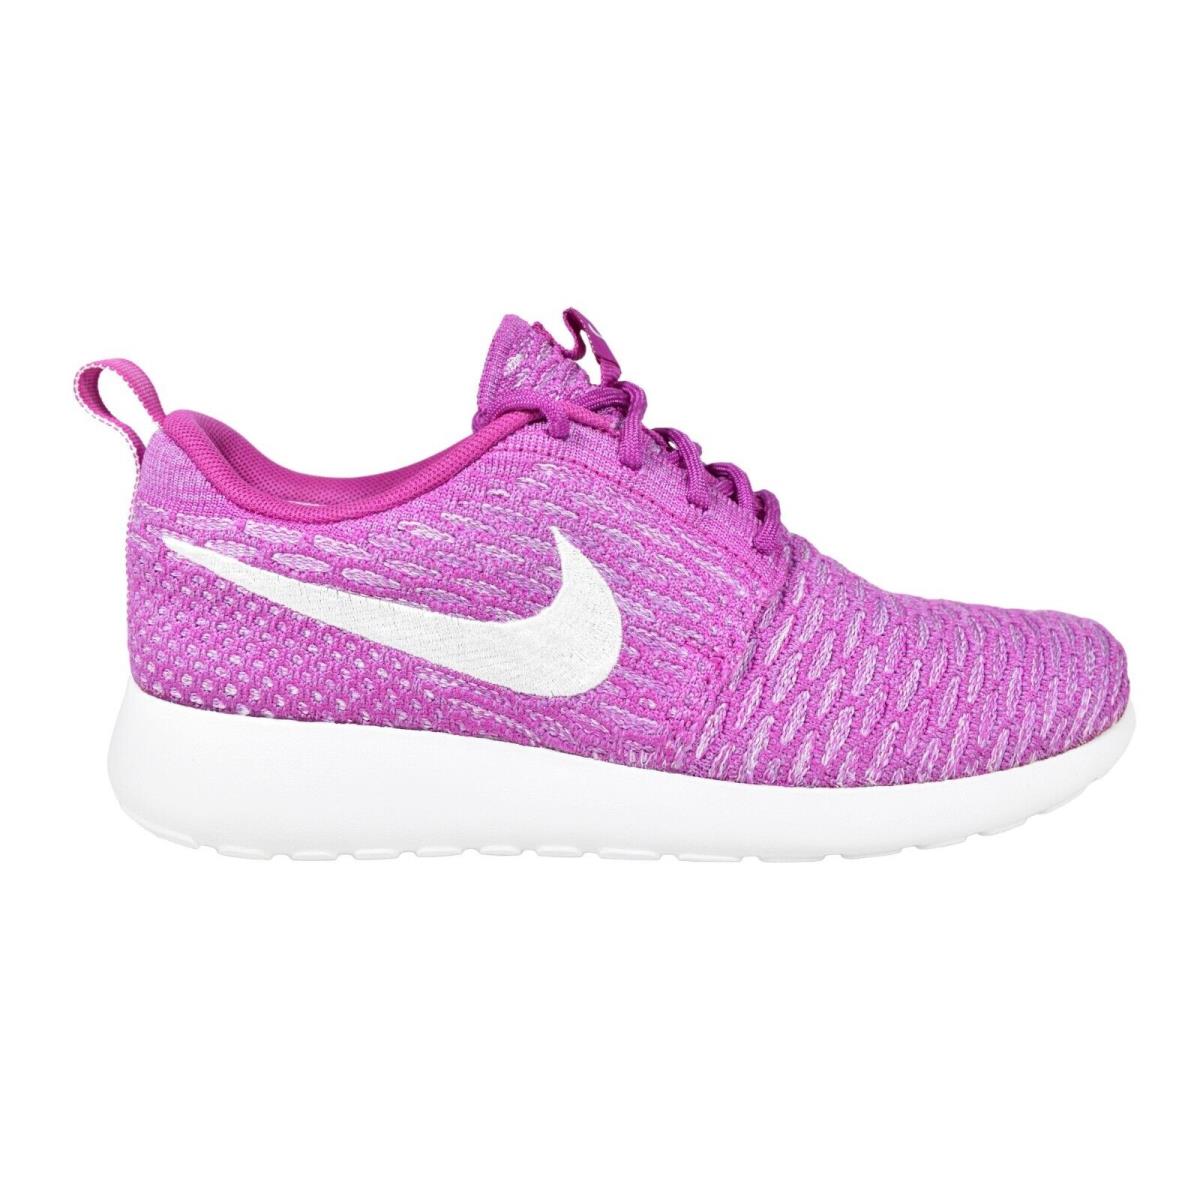 Nike Wmns Rosherun Flyknit Fuchsia Flash 704927-500 Size 6 - Pink